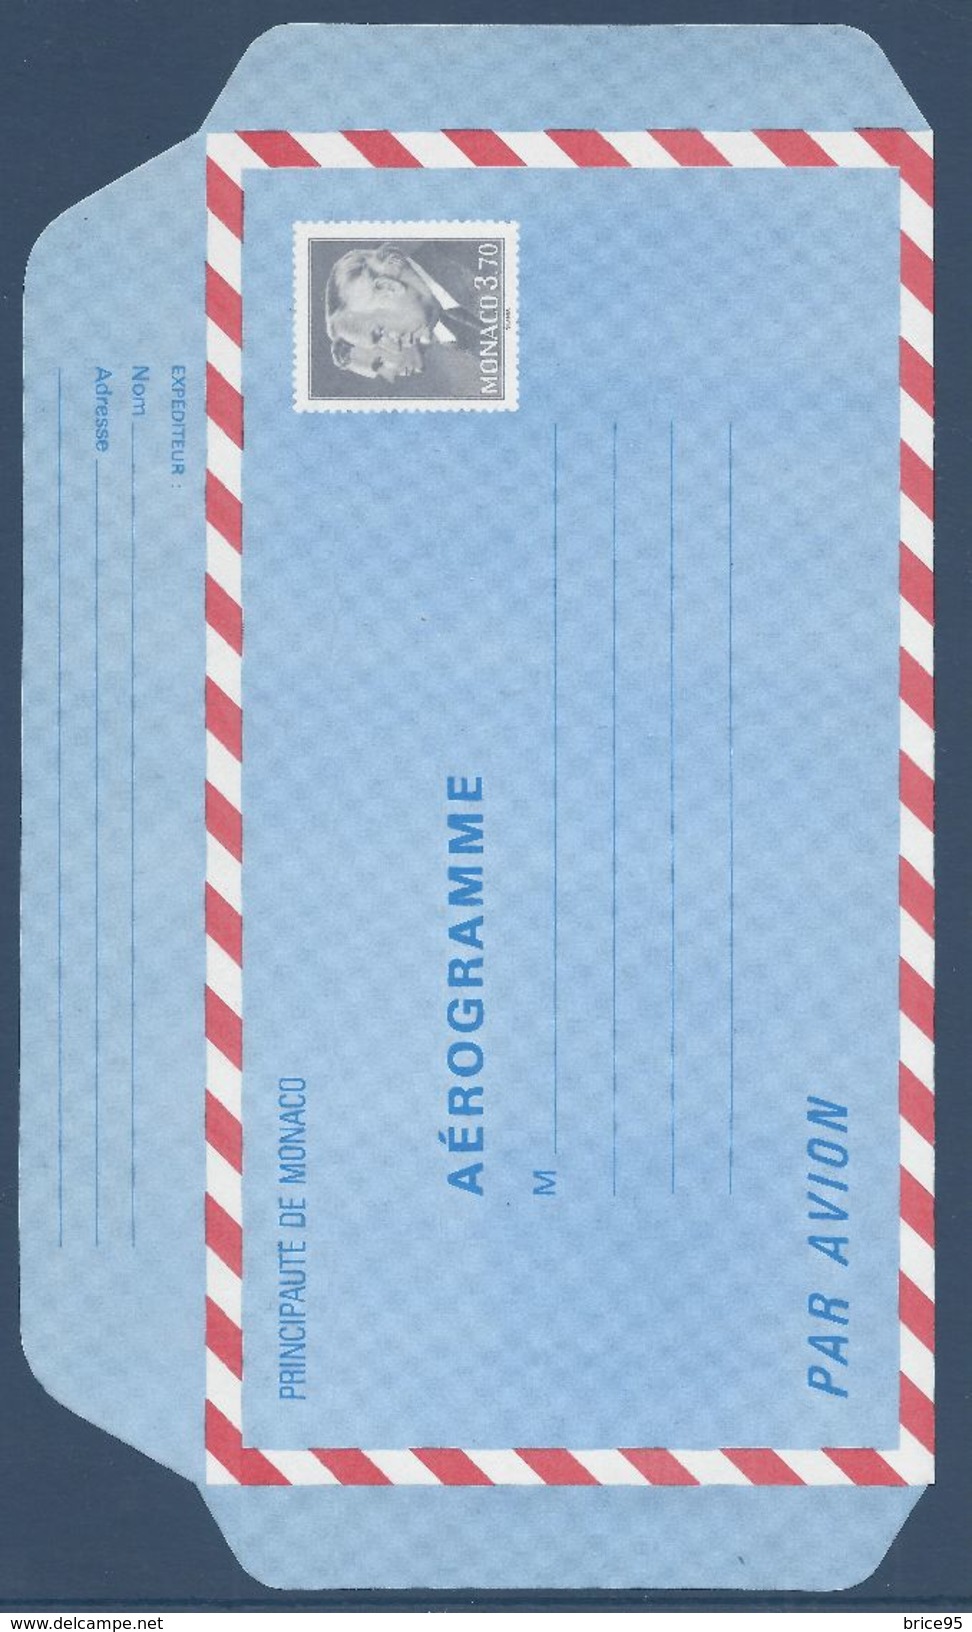 Monaco Aérogrammes - Entiers Postaux - YT N° 507 - Neuf - 1986 - Postal Stationery